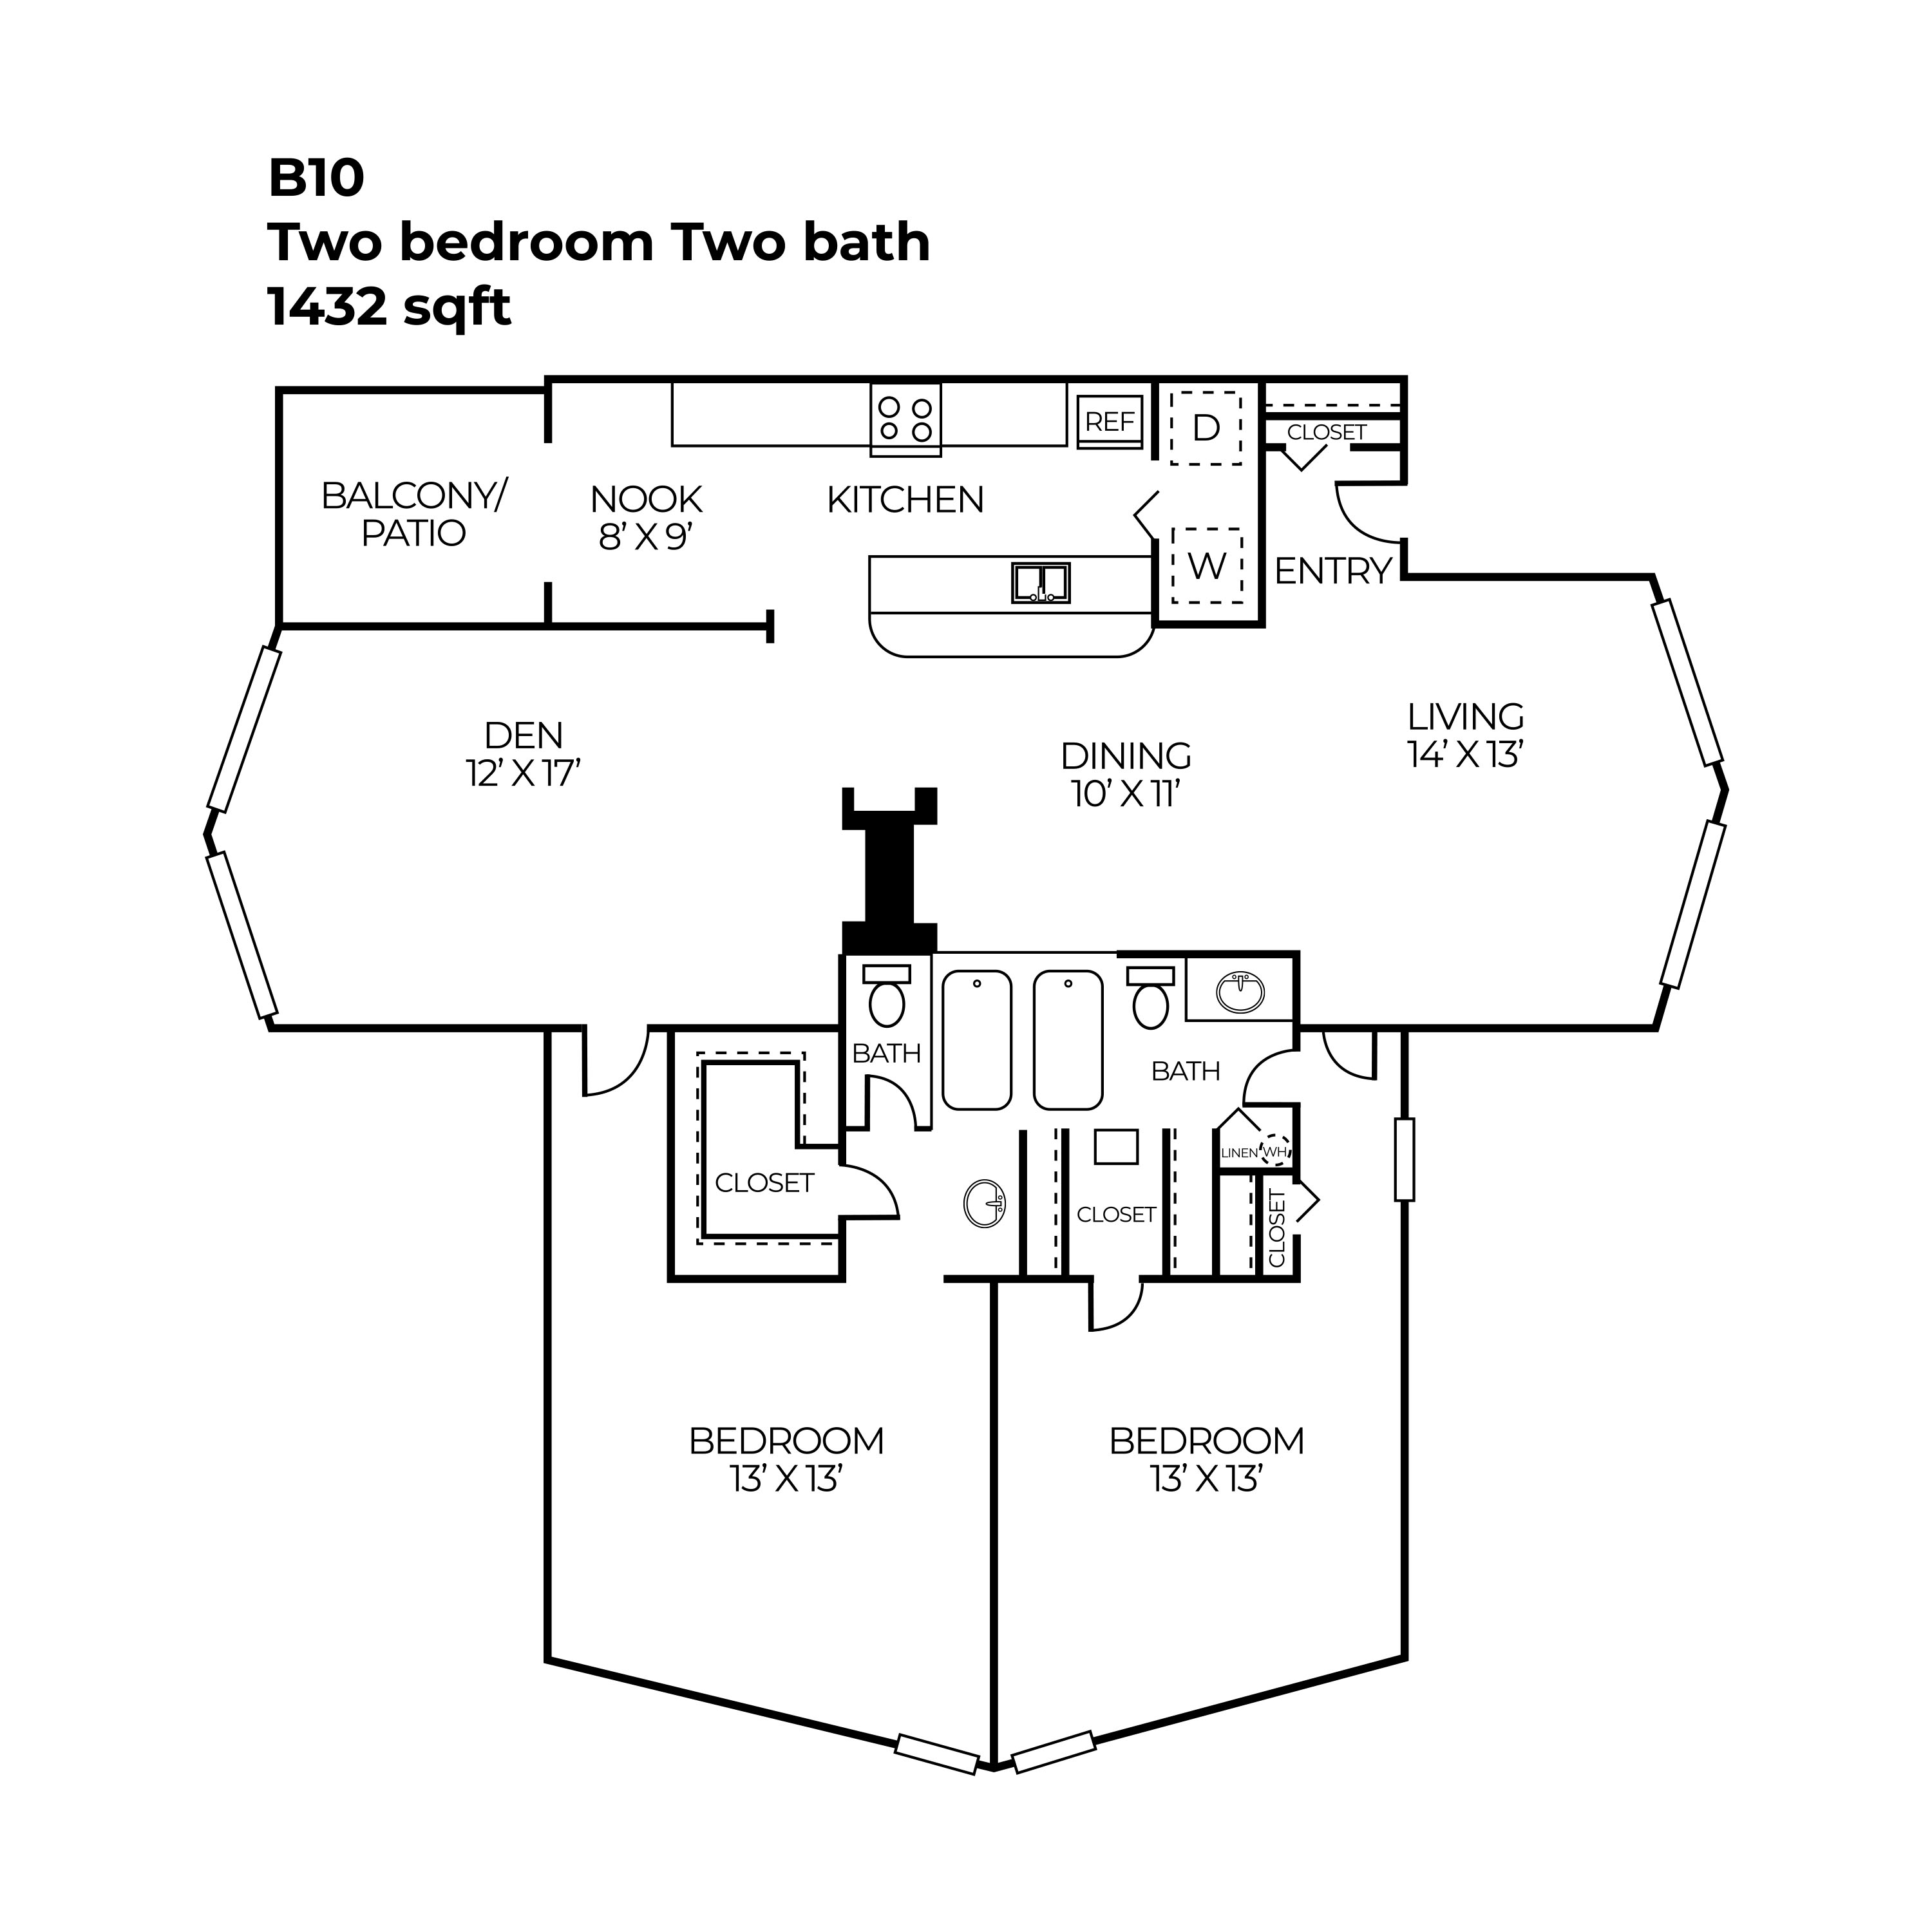 North Star Apartment Homes - Floorplan - B10